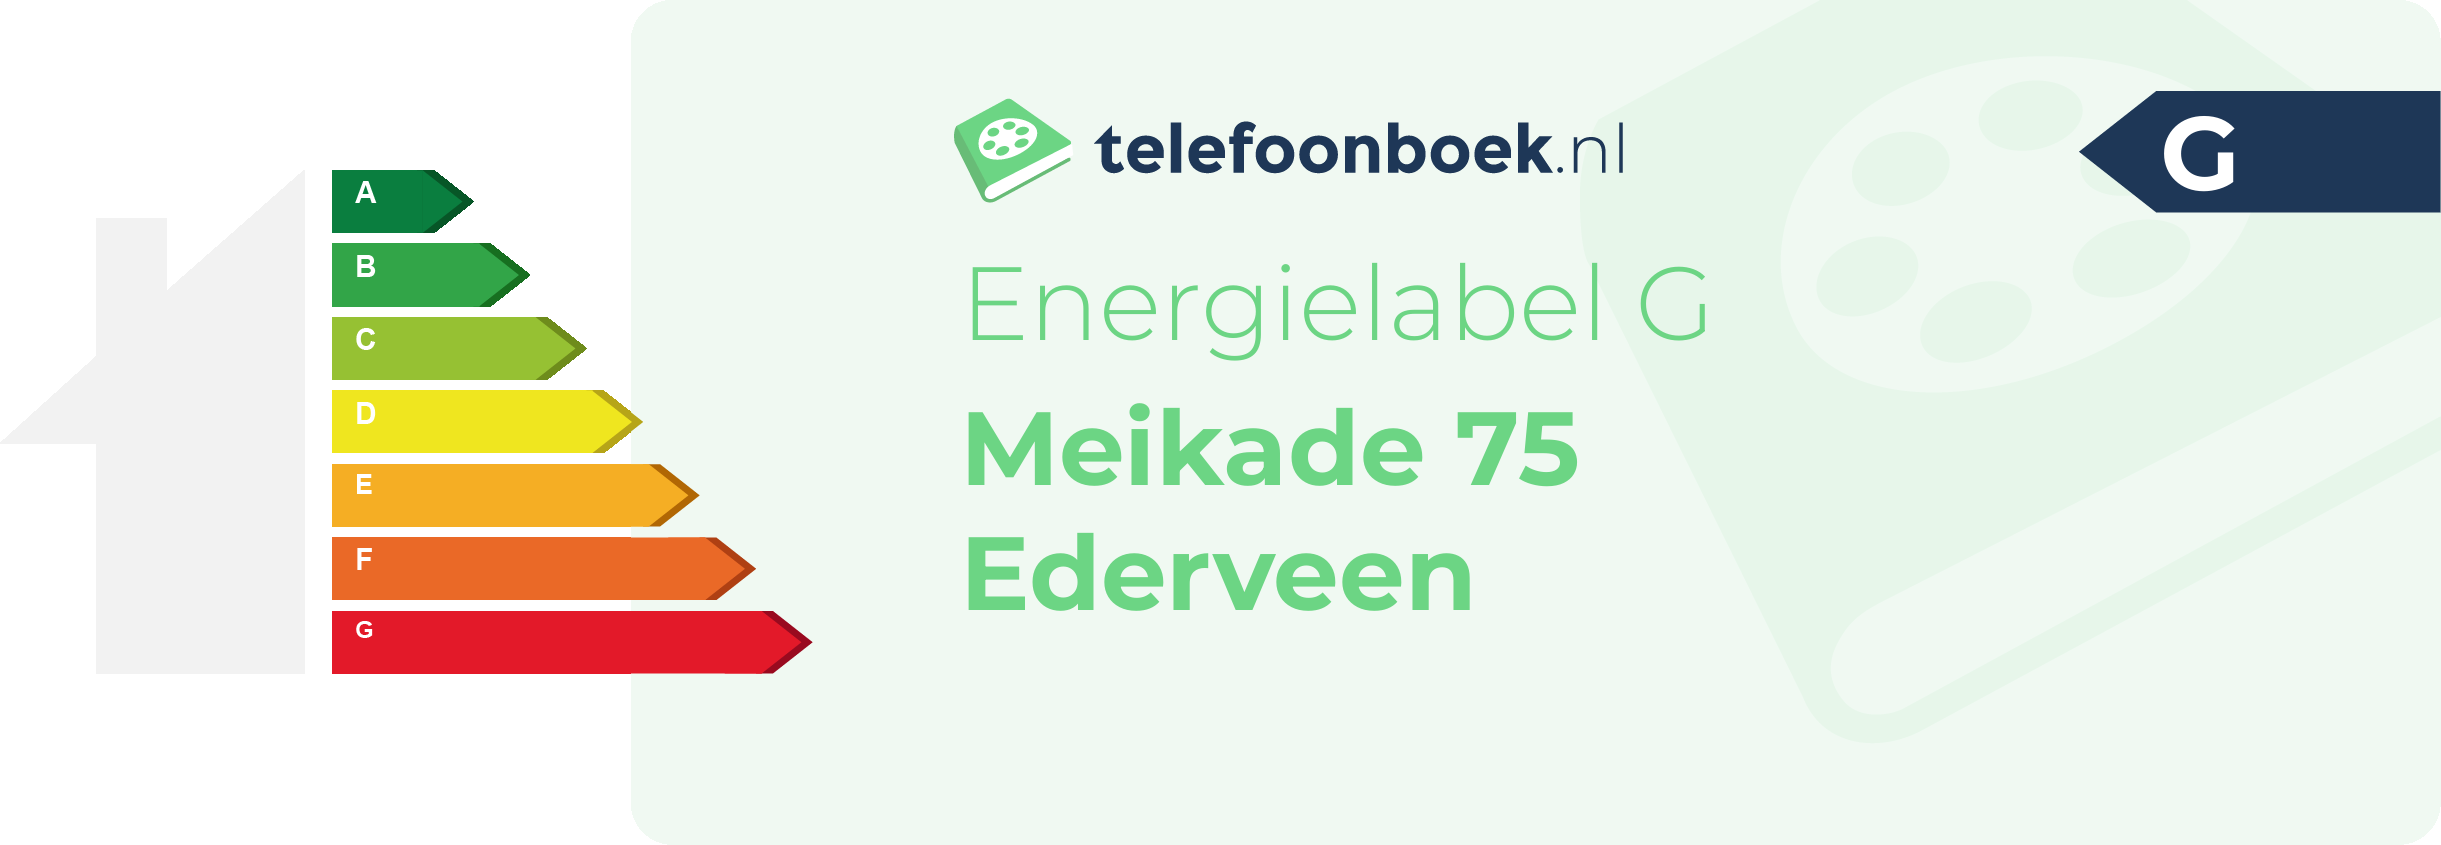 Energielabel Meikade 75 Ederveen